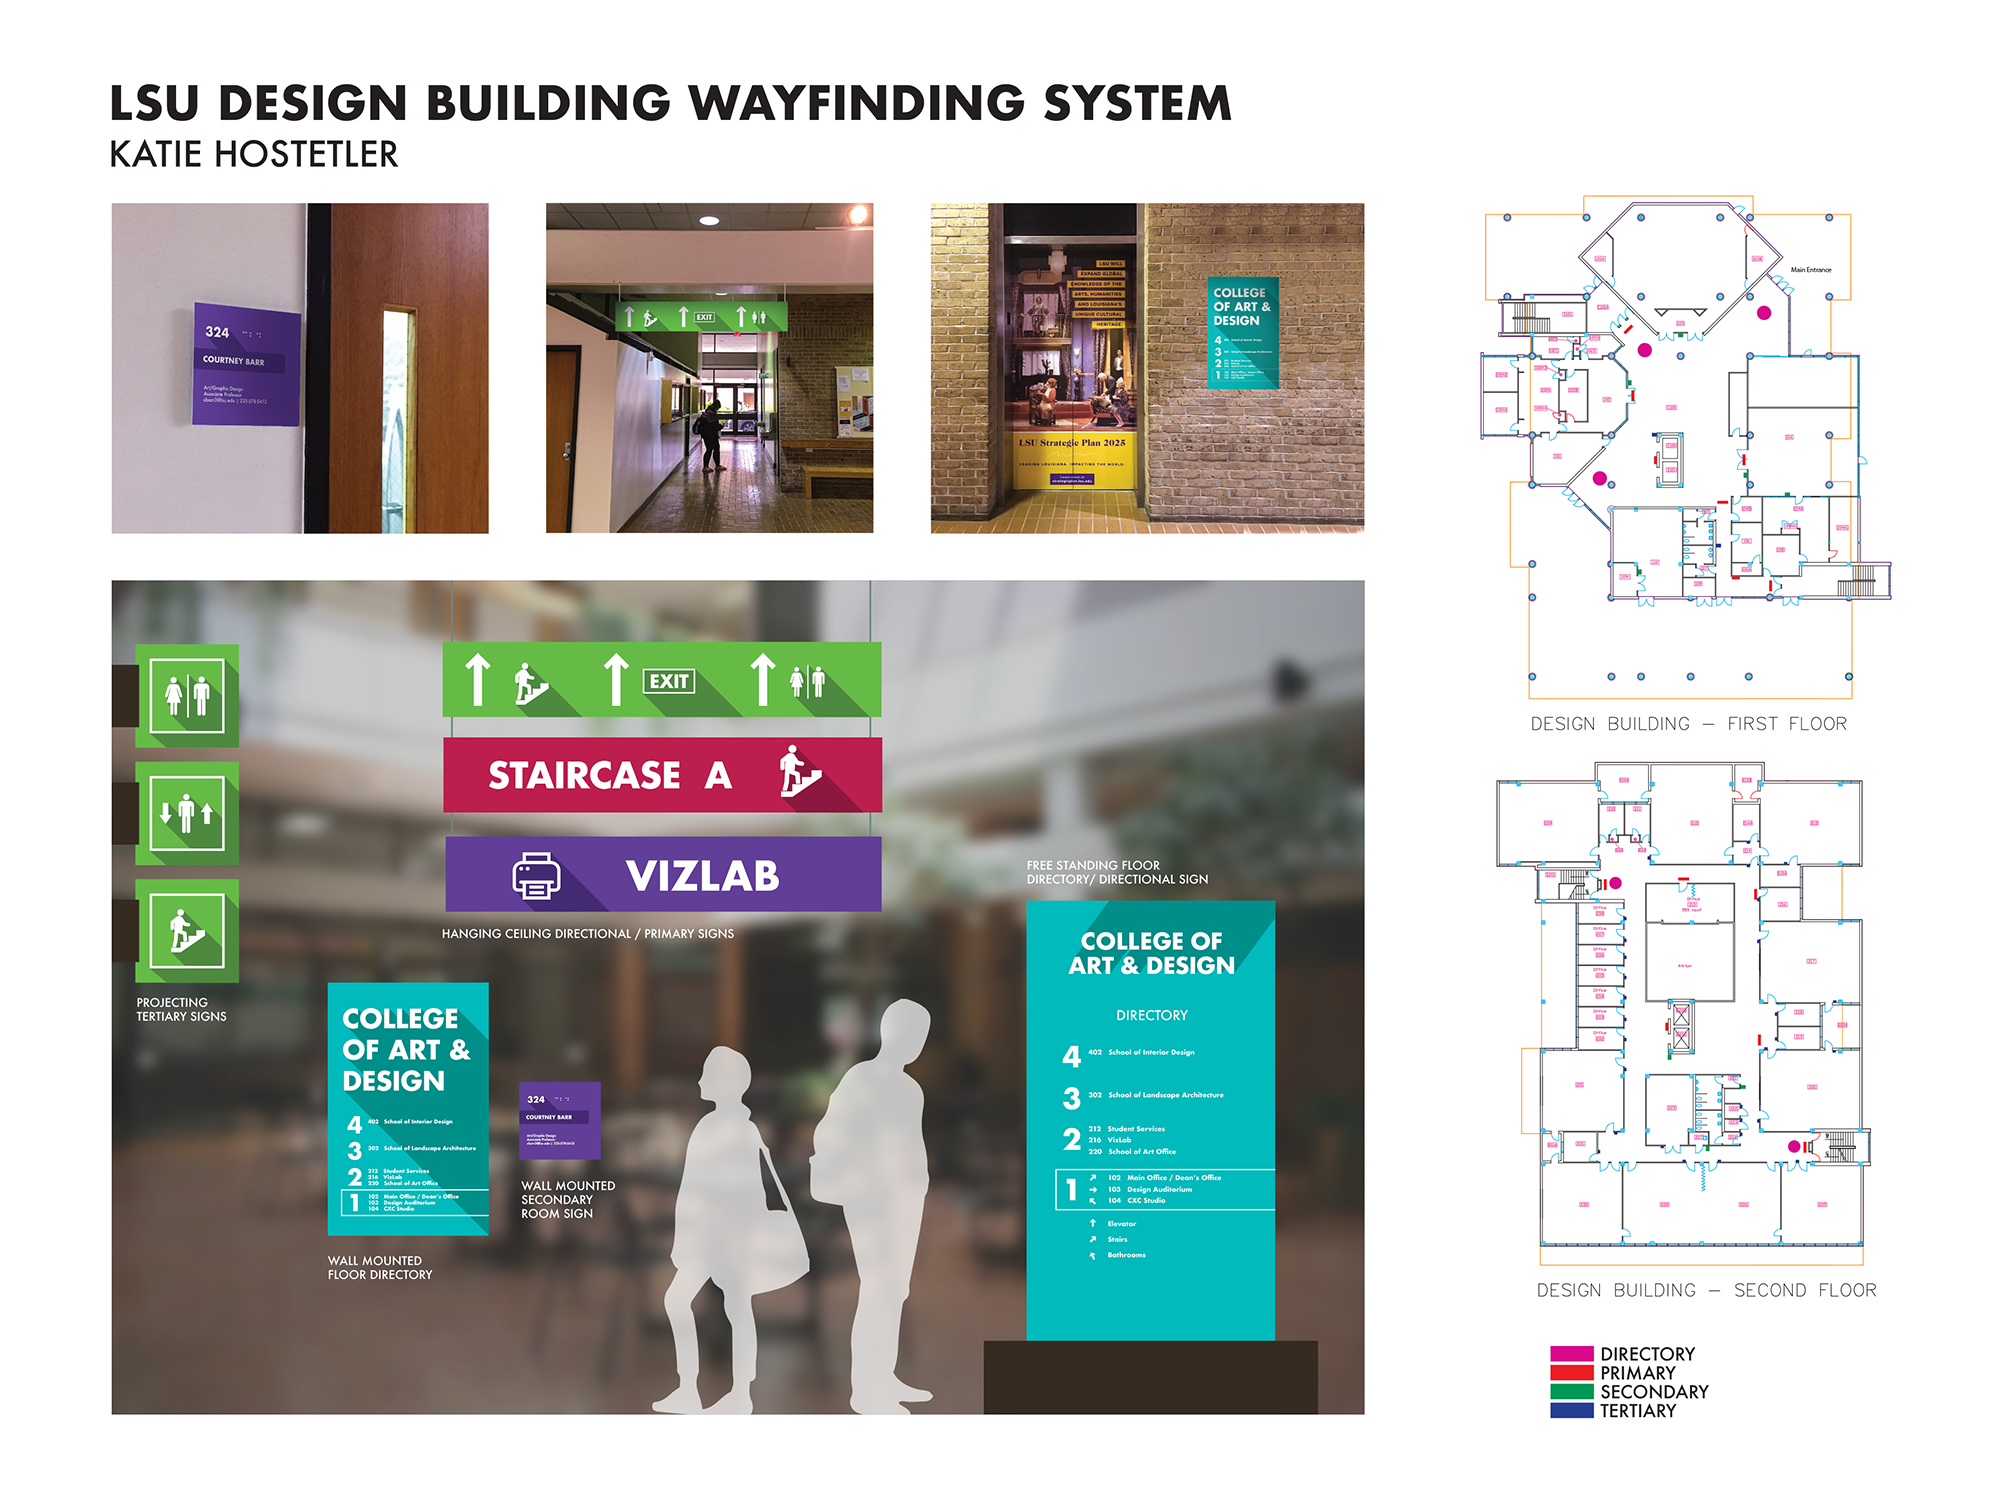 Design Building Wayfinding System by Katie Hostetler